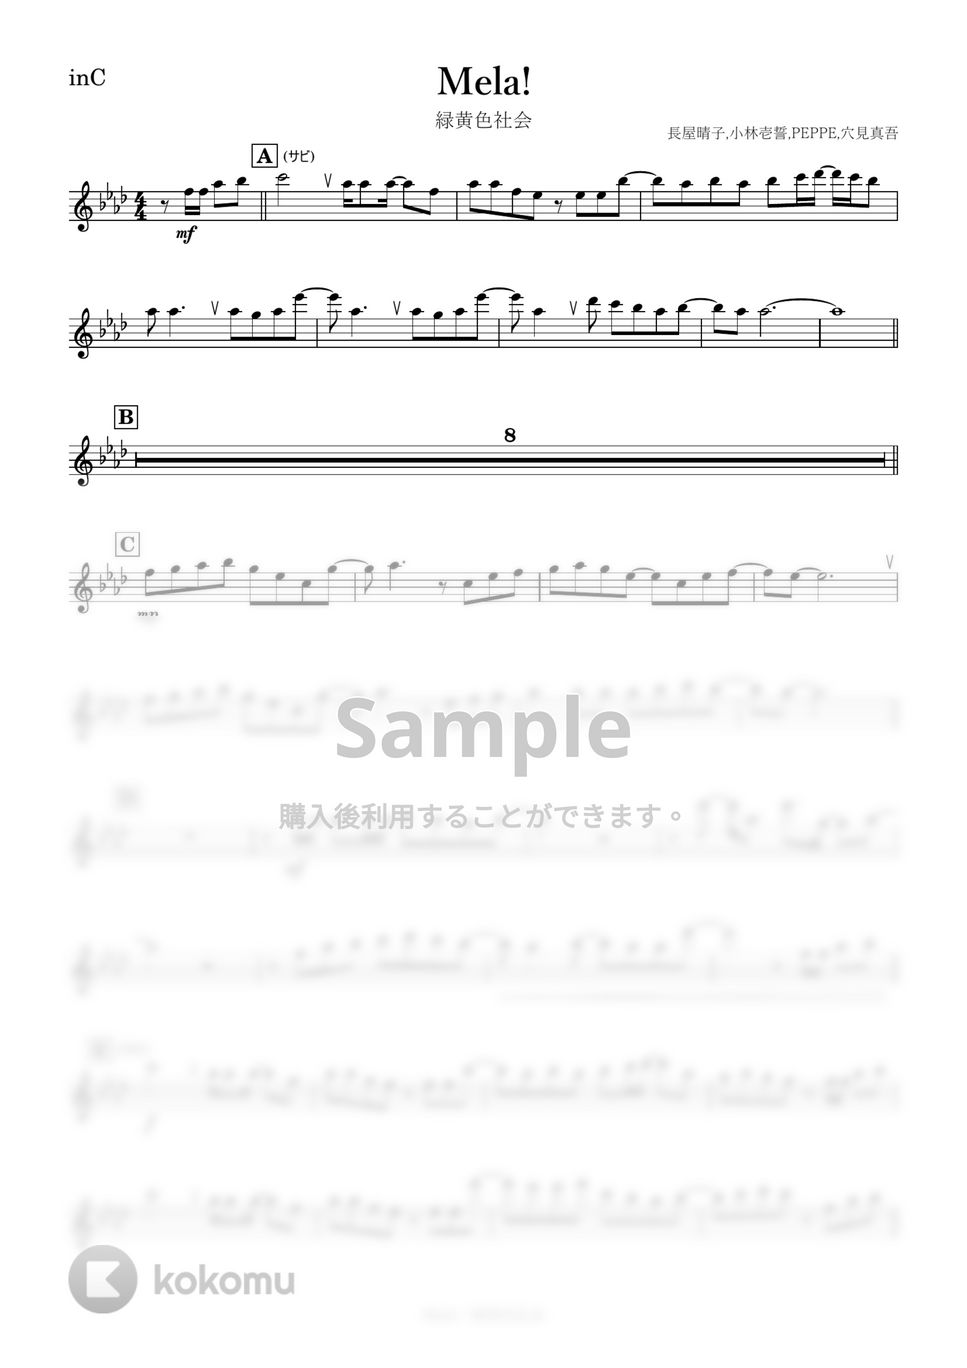 緑黄色社会 - Mela! (C) by kanamusic